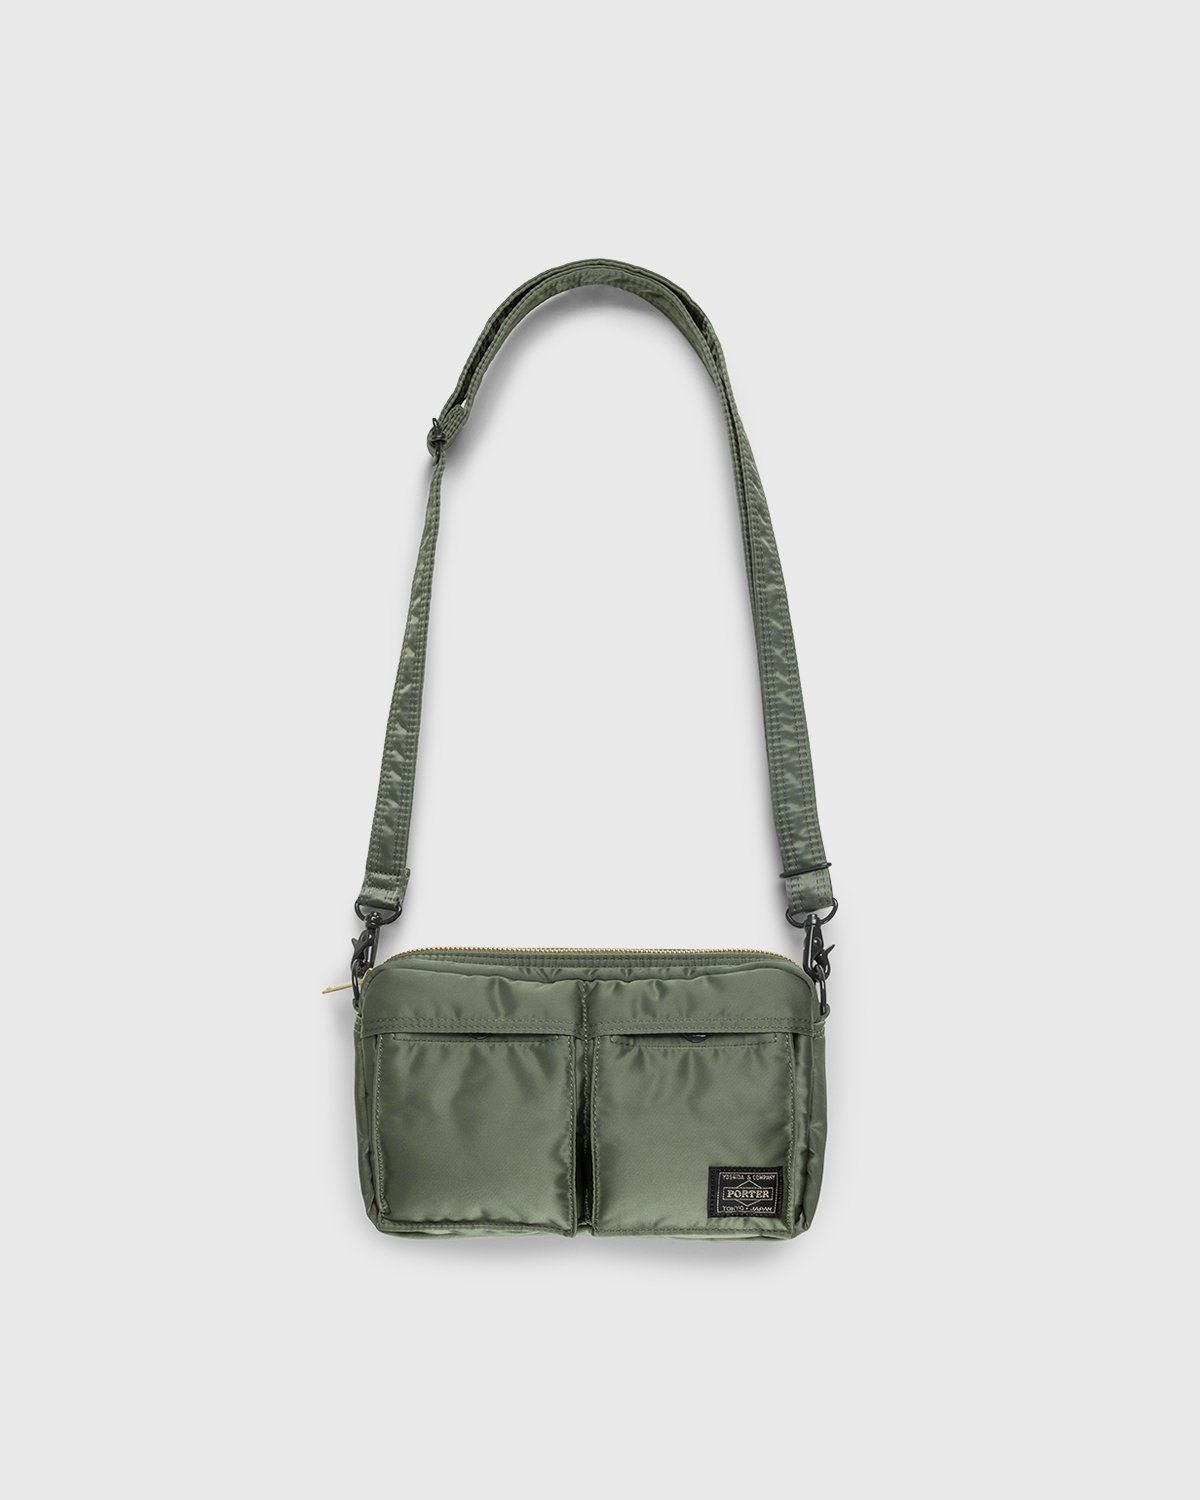 Porter-Yoshida & Co. – Tanker Shoulder Bag Sage Green - Pouches - Green - Image 1